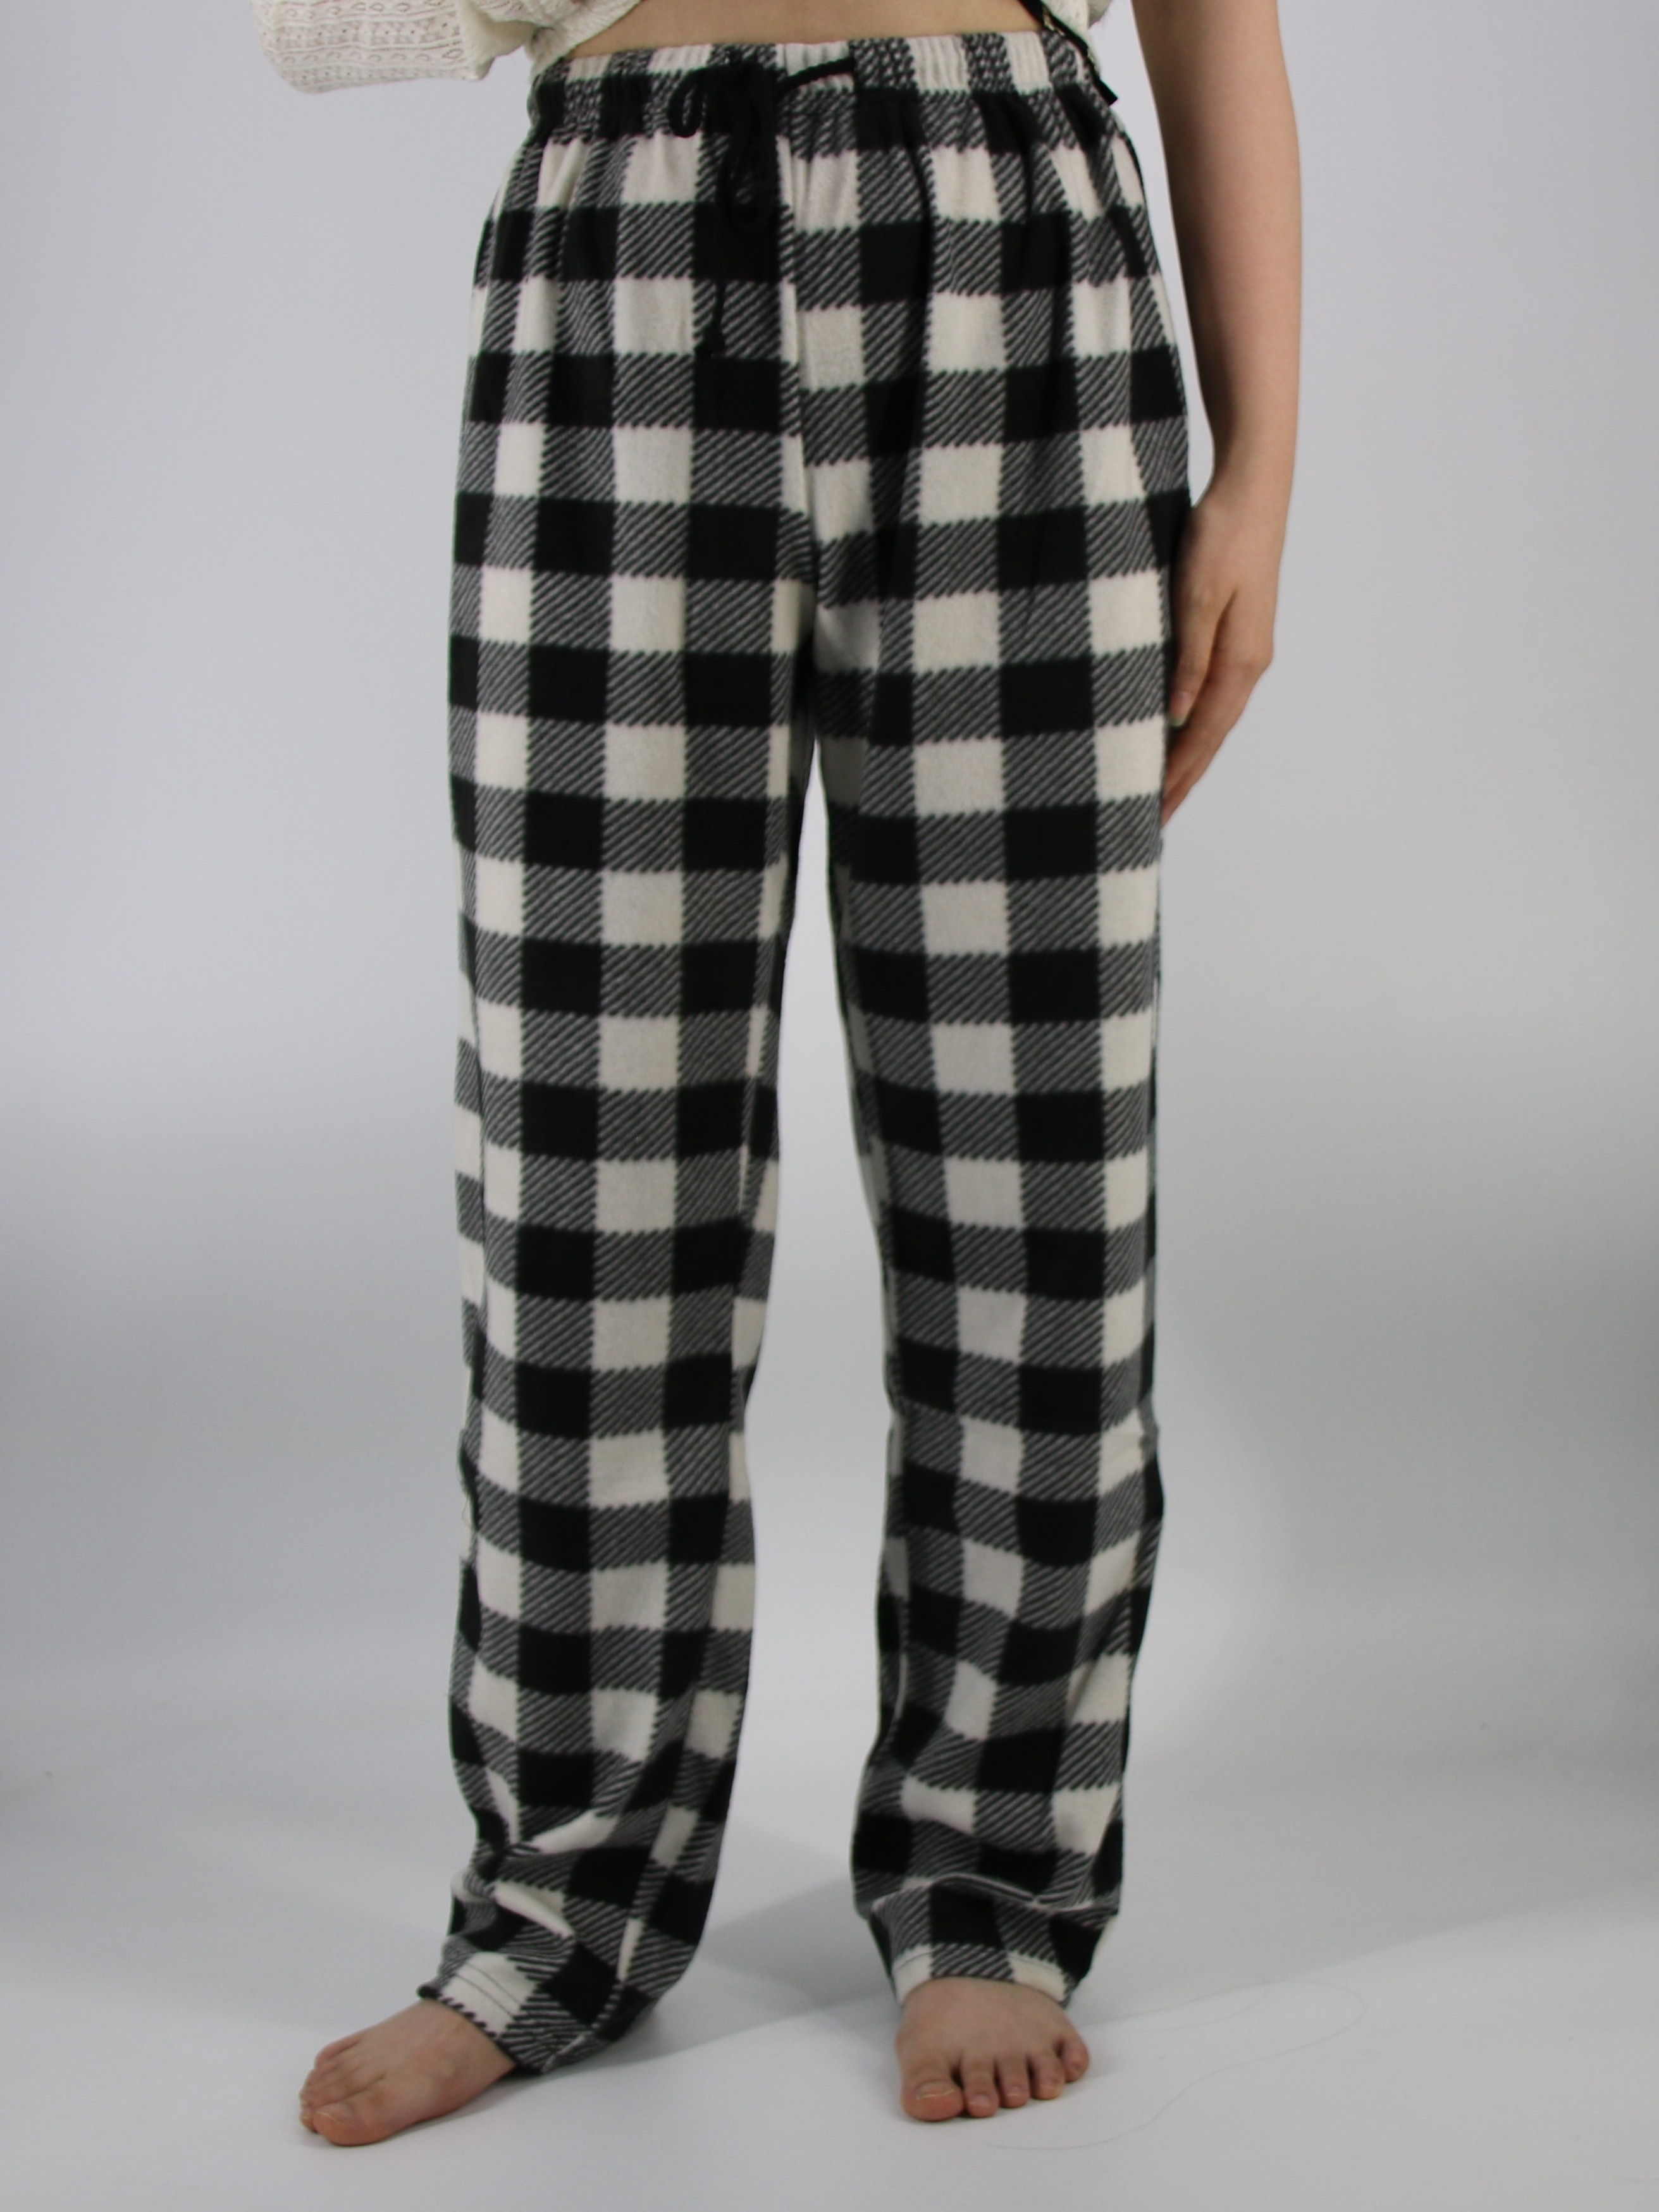 Pantalones de pijama de mujer con bolsillos, pantalones de pijama